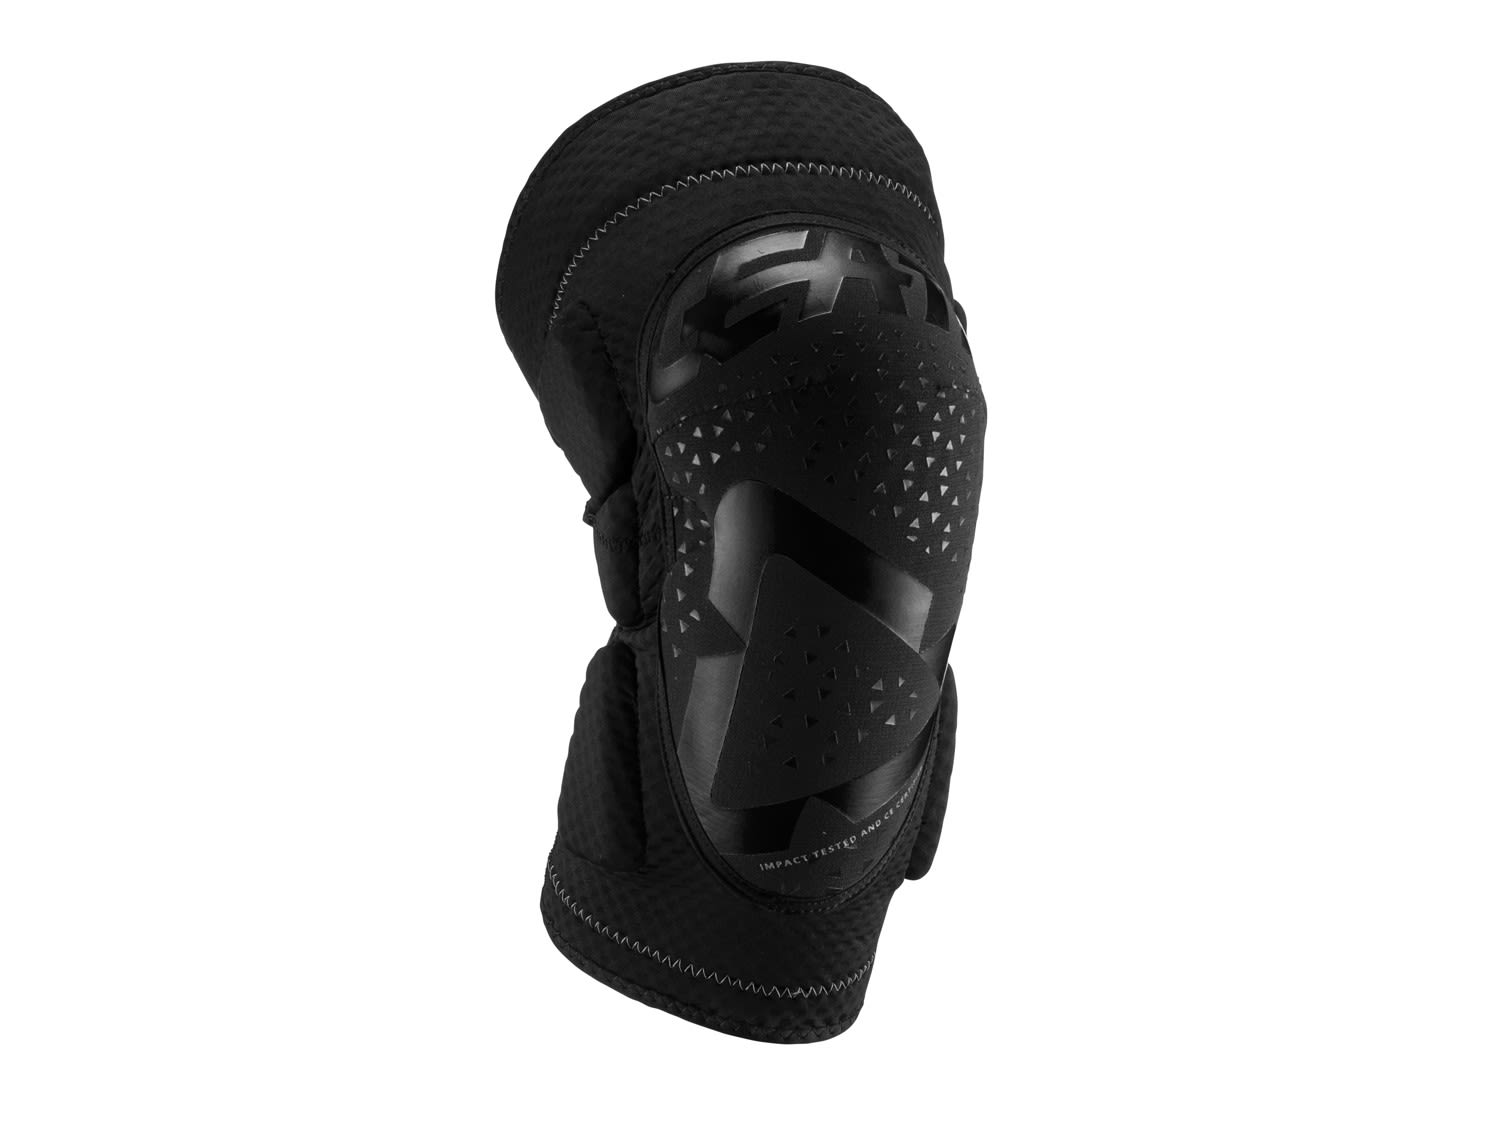 Leatt Knee Guard 3DF 5-0 Schwarz- Knieprotektoren- Grsse S-M - Farbe Black